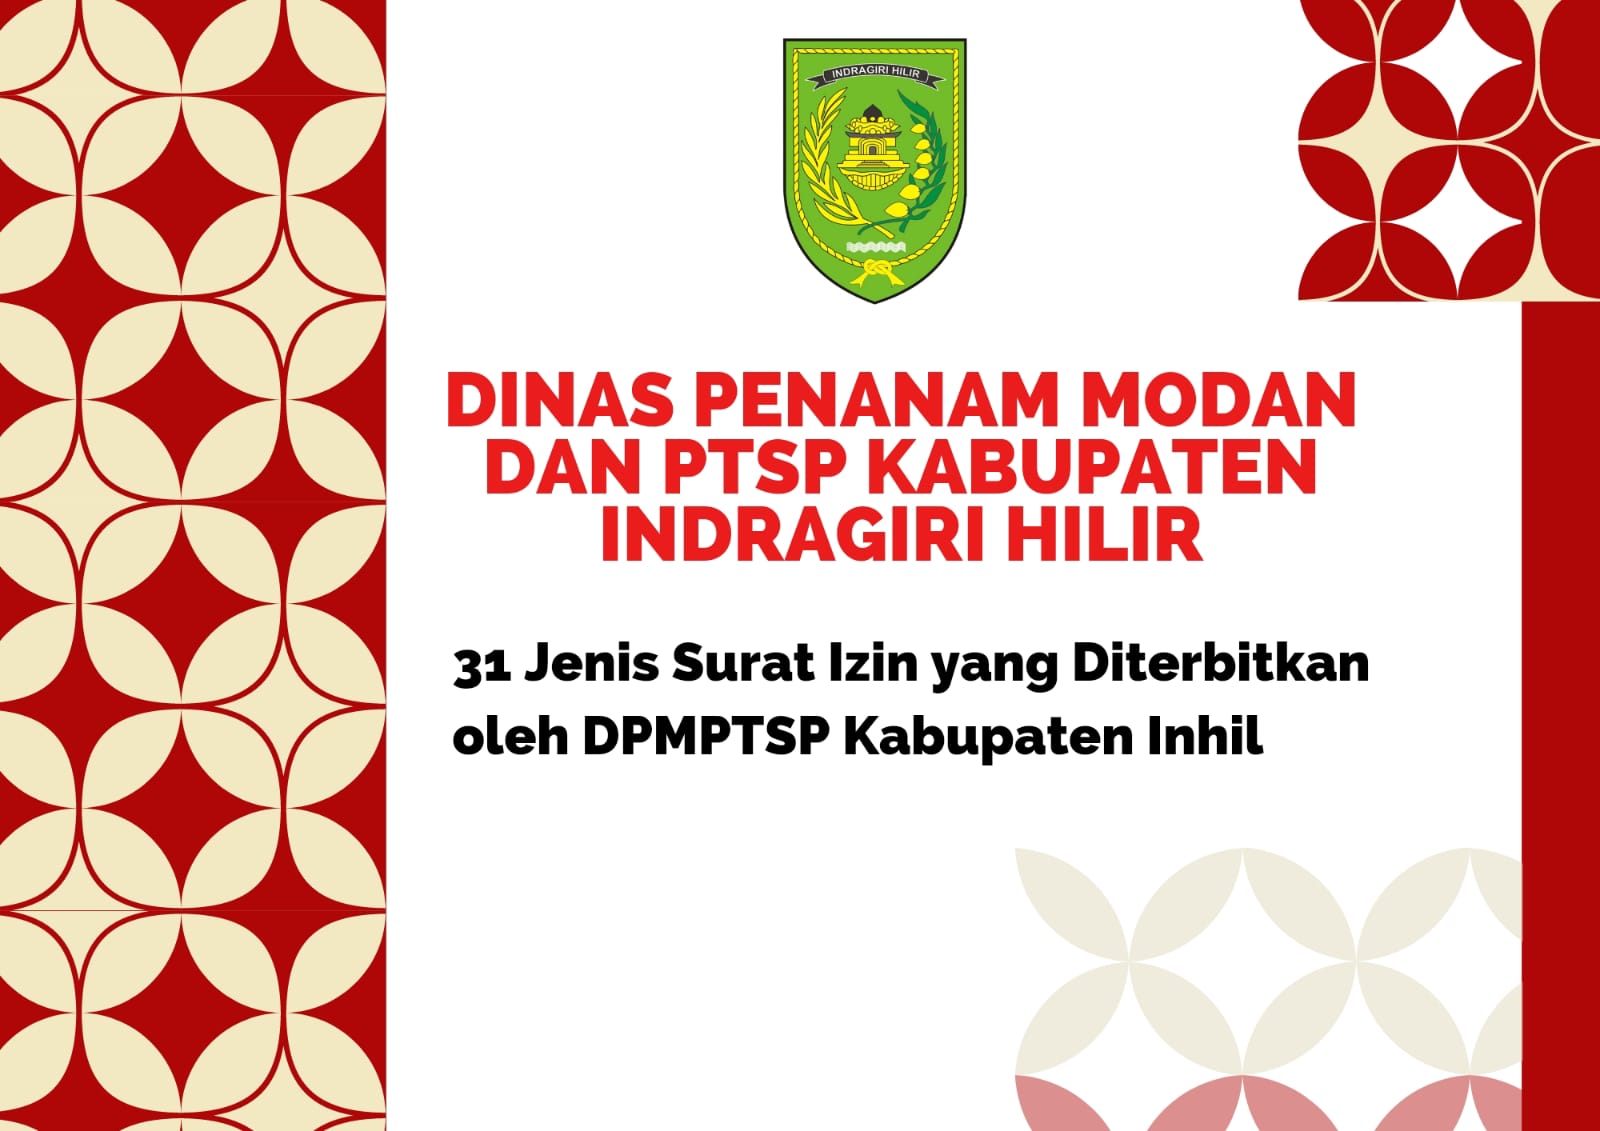 Cek Nama-namanya Disini! 31 Jenis Surat Izin yang Diterbitkan oleh DPMPTSP Kabupaten Inhil